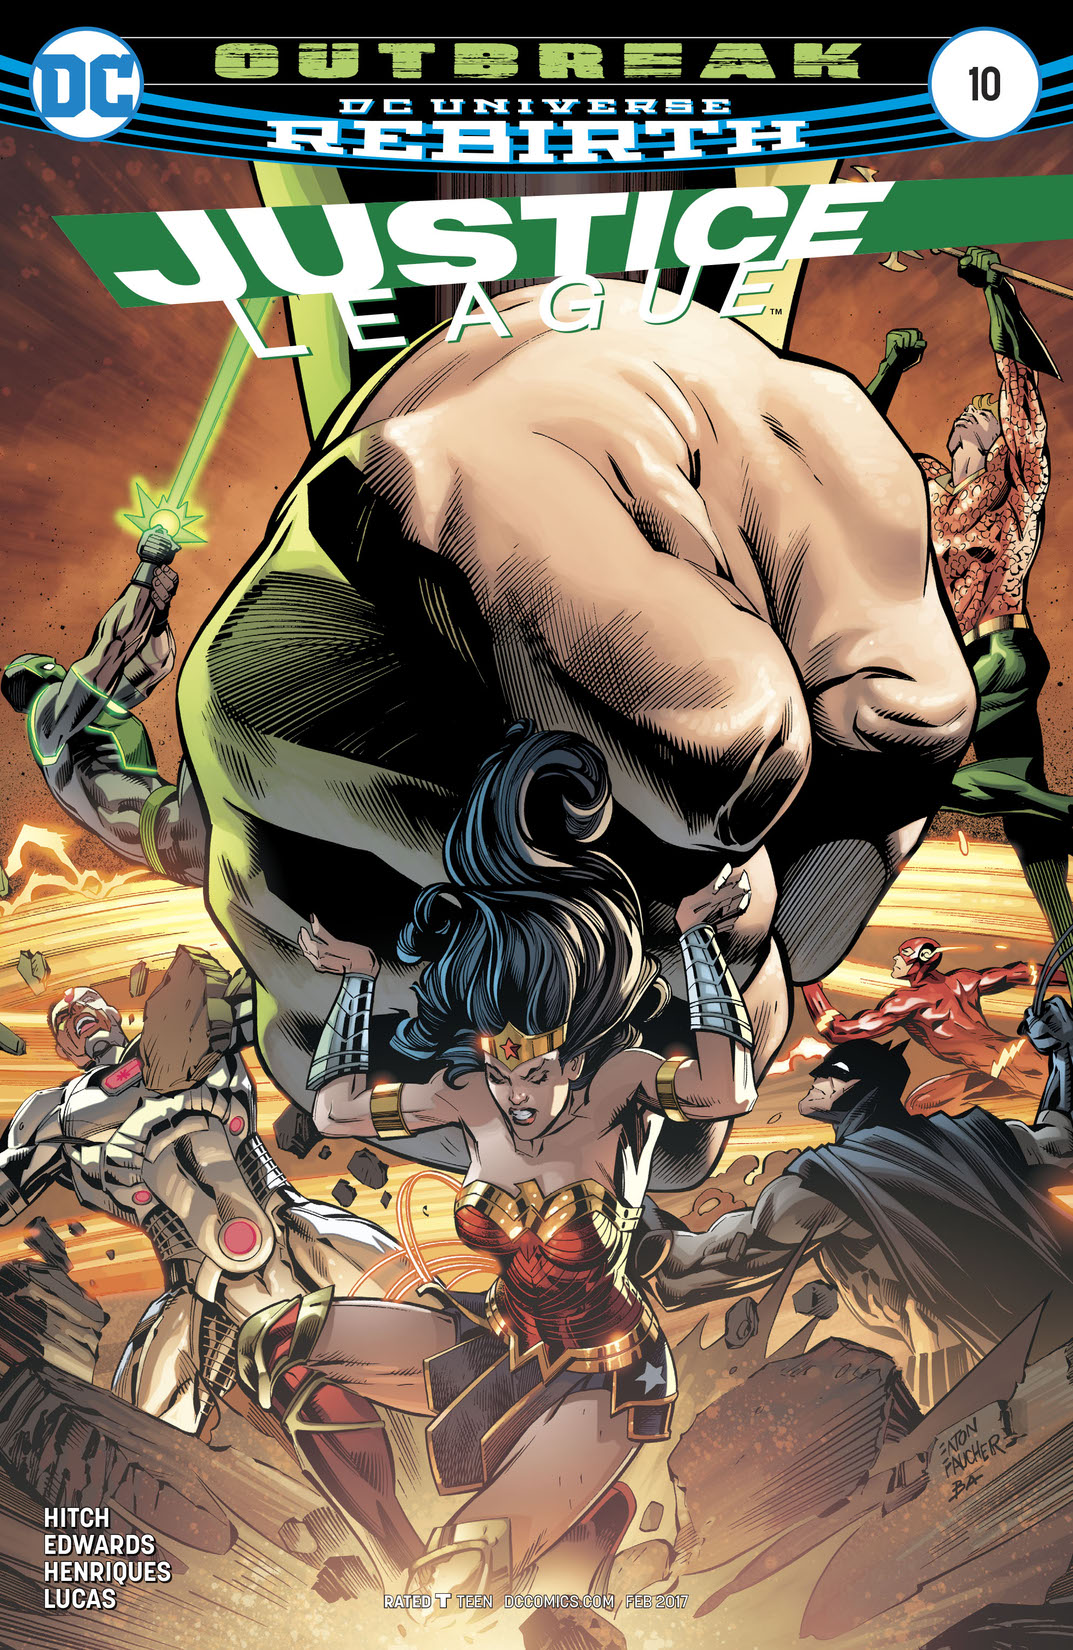 Justice League (2016-) #10 preview images